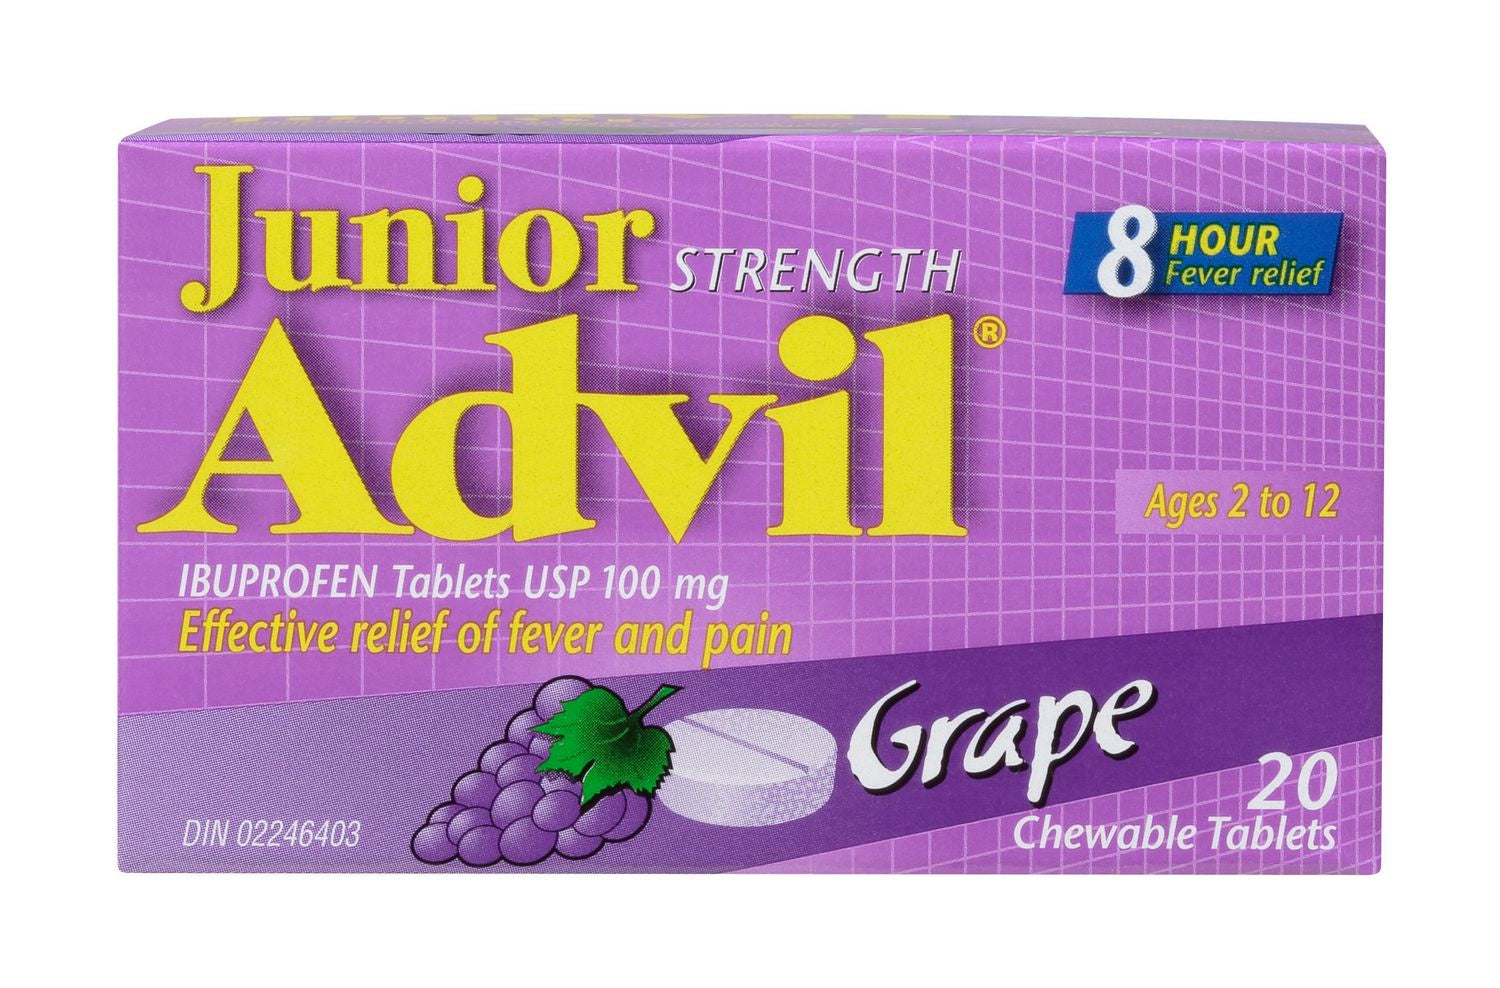 Advil Junior Strength, Chewable, Ages 2 - 12, Grape Flavor, 20 Tablets